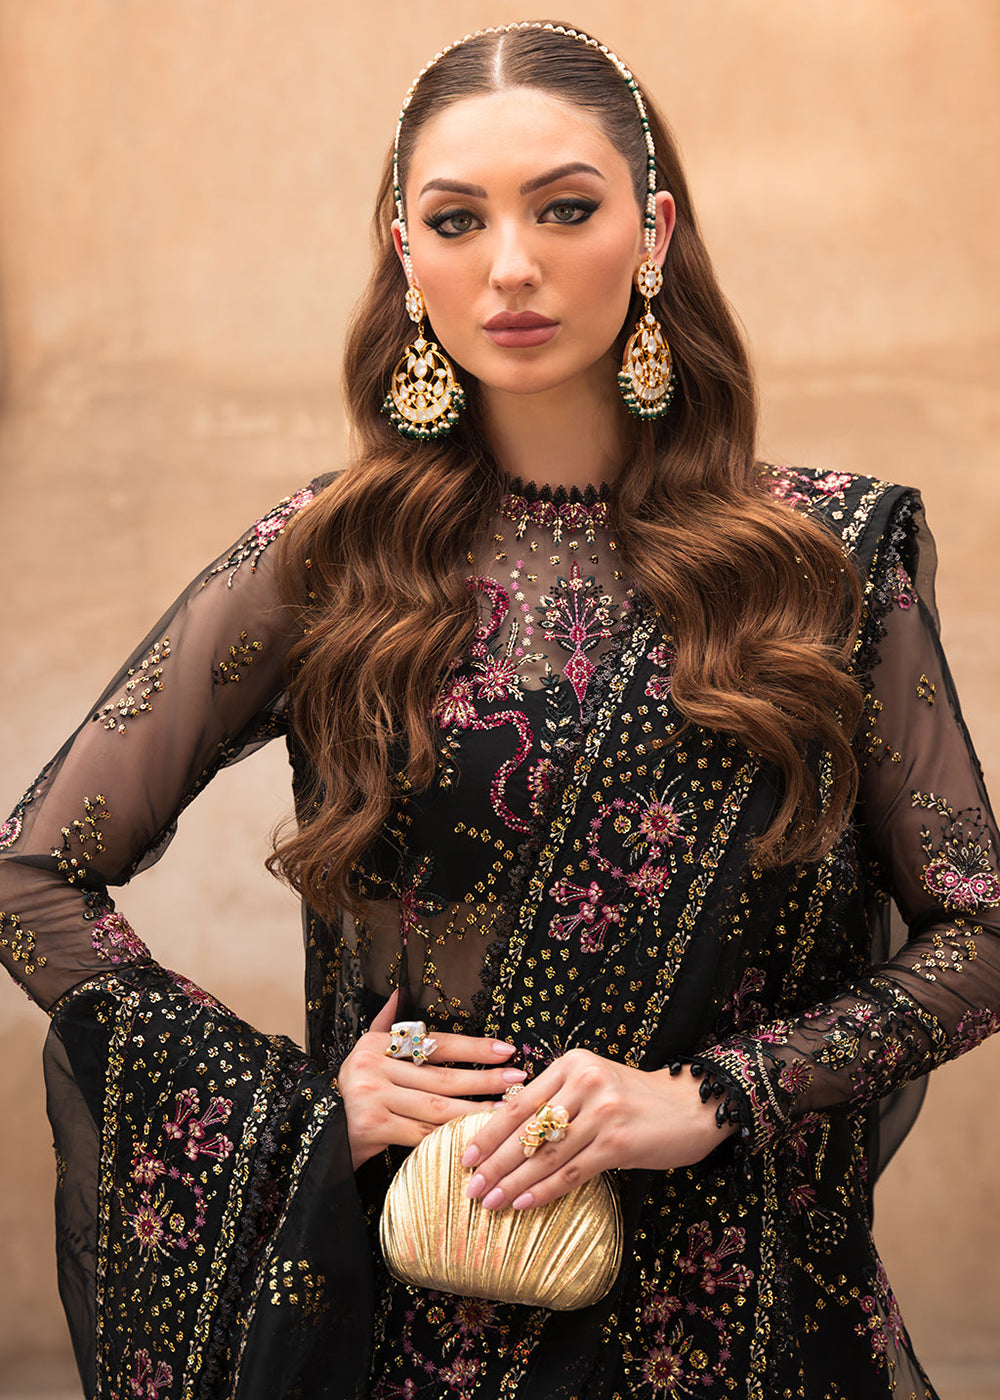 Buy Now Pehli Nazar Wedding Formals '24 by Ayzel | NAZNEEN Online at Empress in USA, UK, Canada, Germany, Italy, Dubai & Worldwide at Empress Clothing.